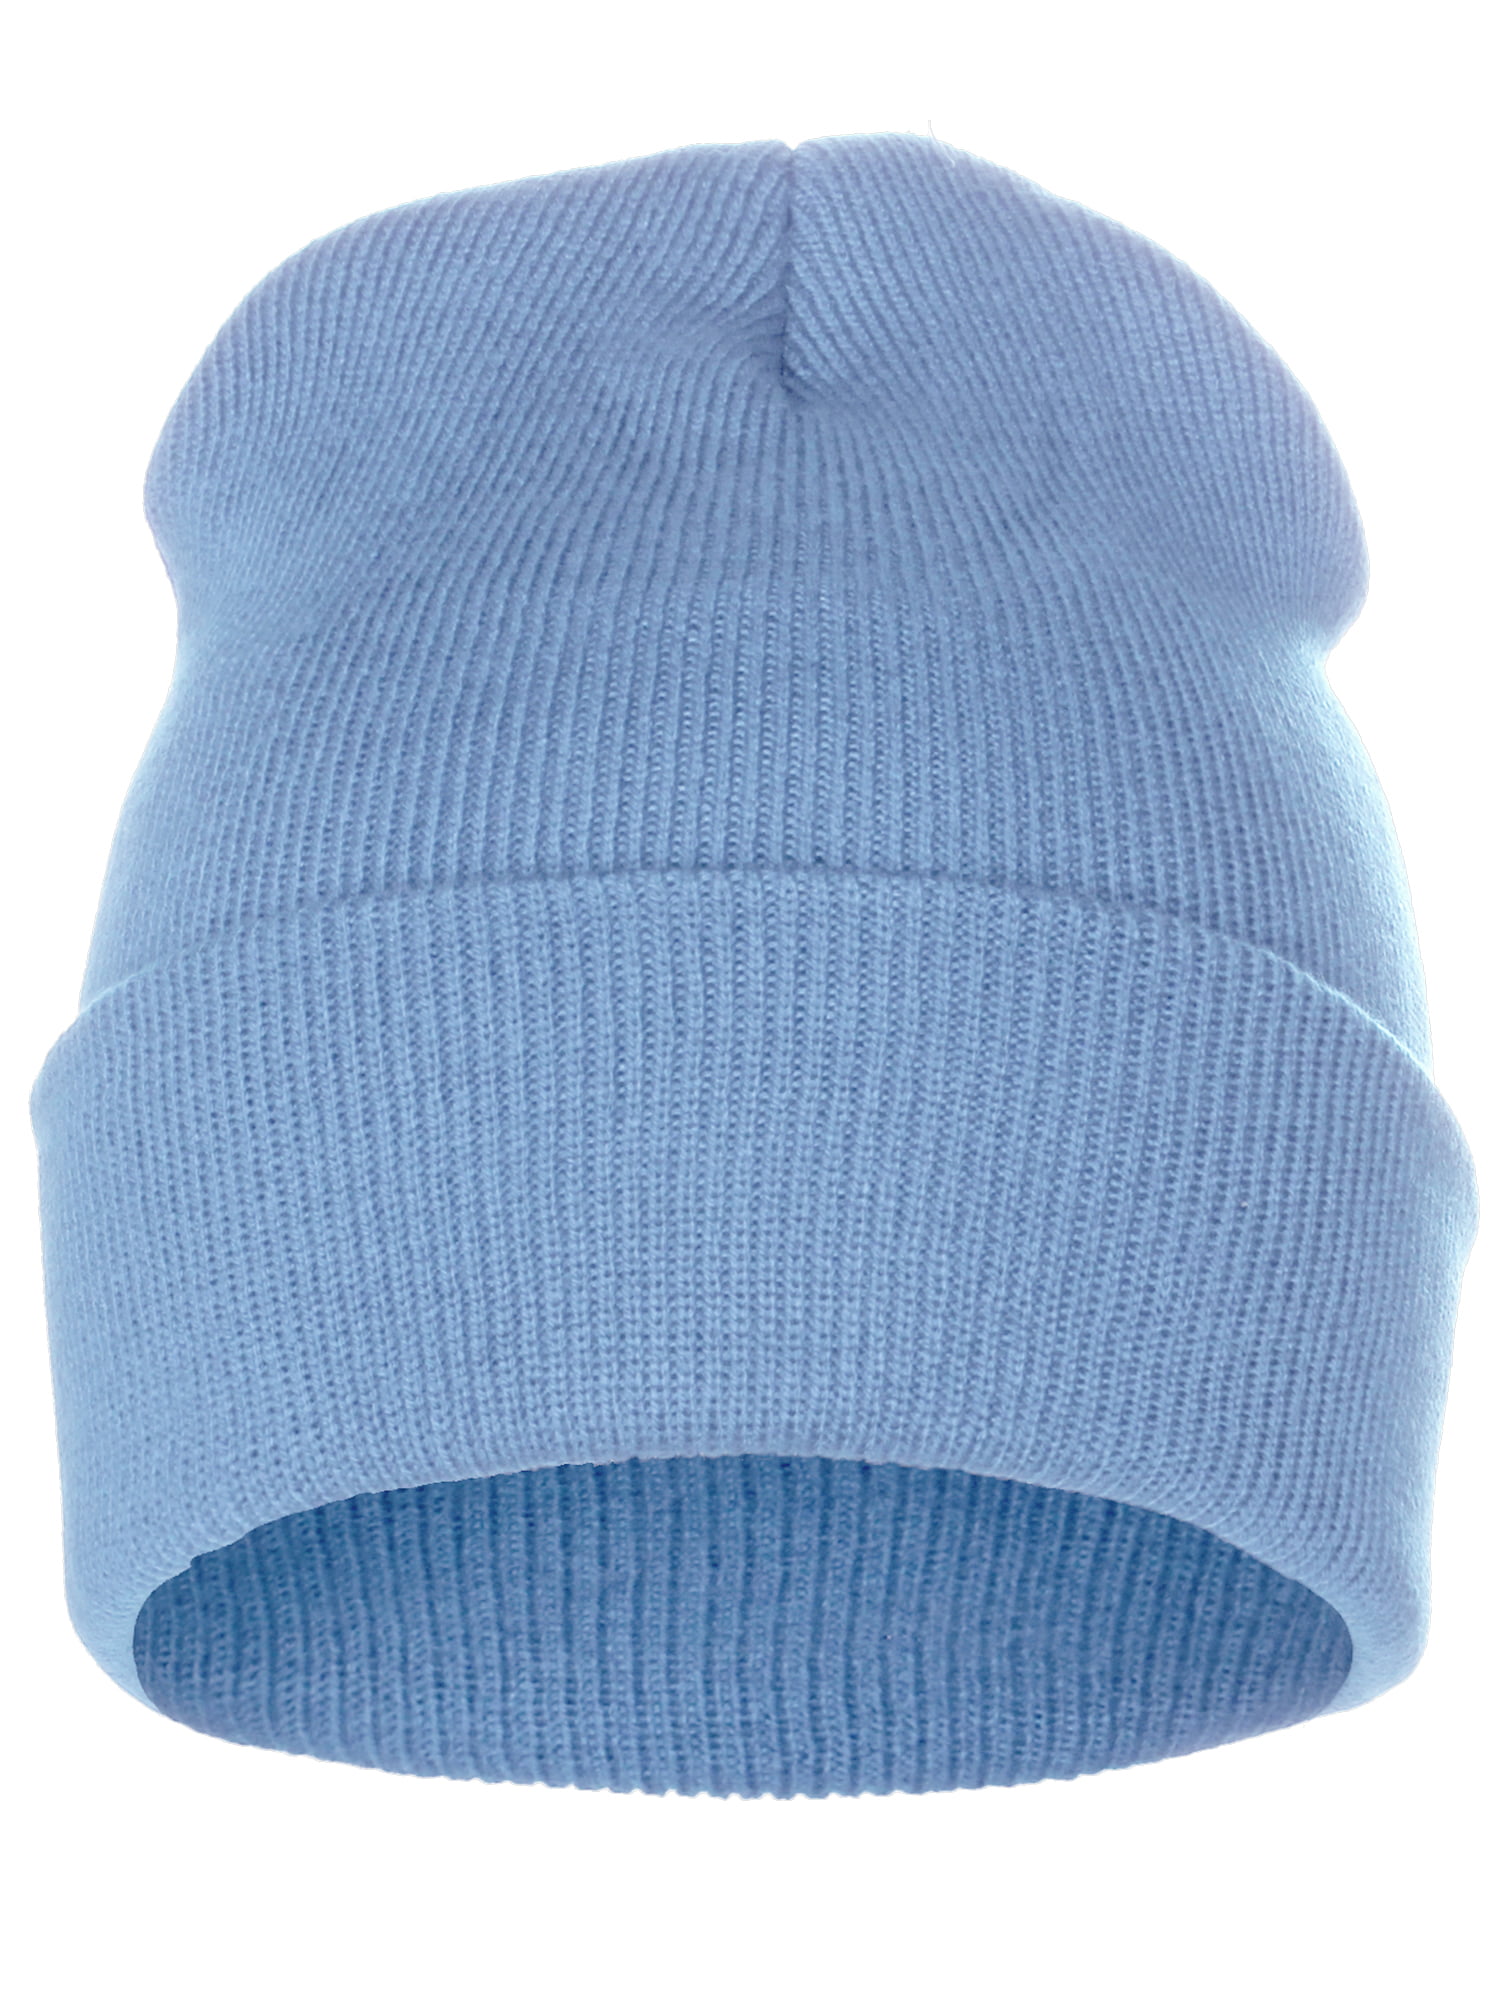 Omkreds Gurgle verden Classic Plain Cuffed Beanie Winter Knit Hat Skully Cap, Sky Blue -  Walmart.com